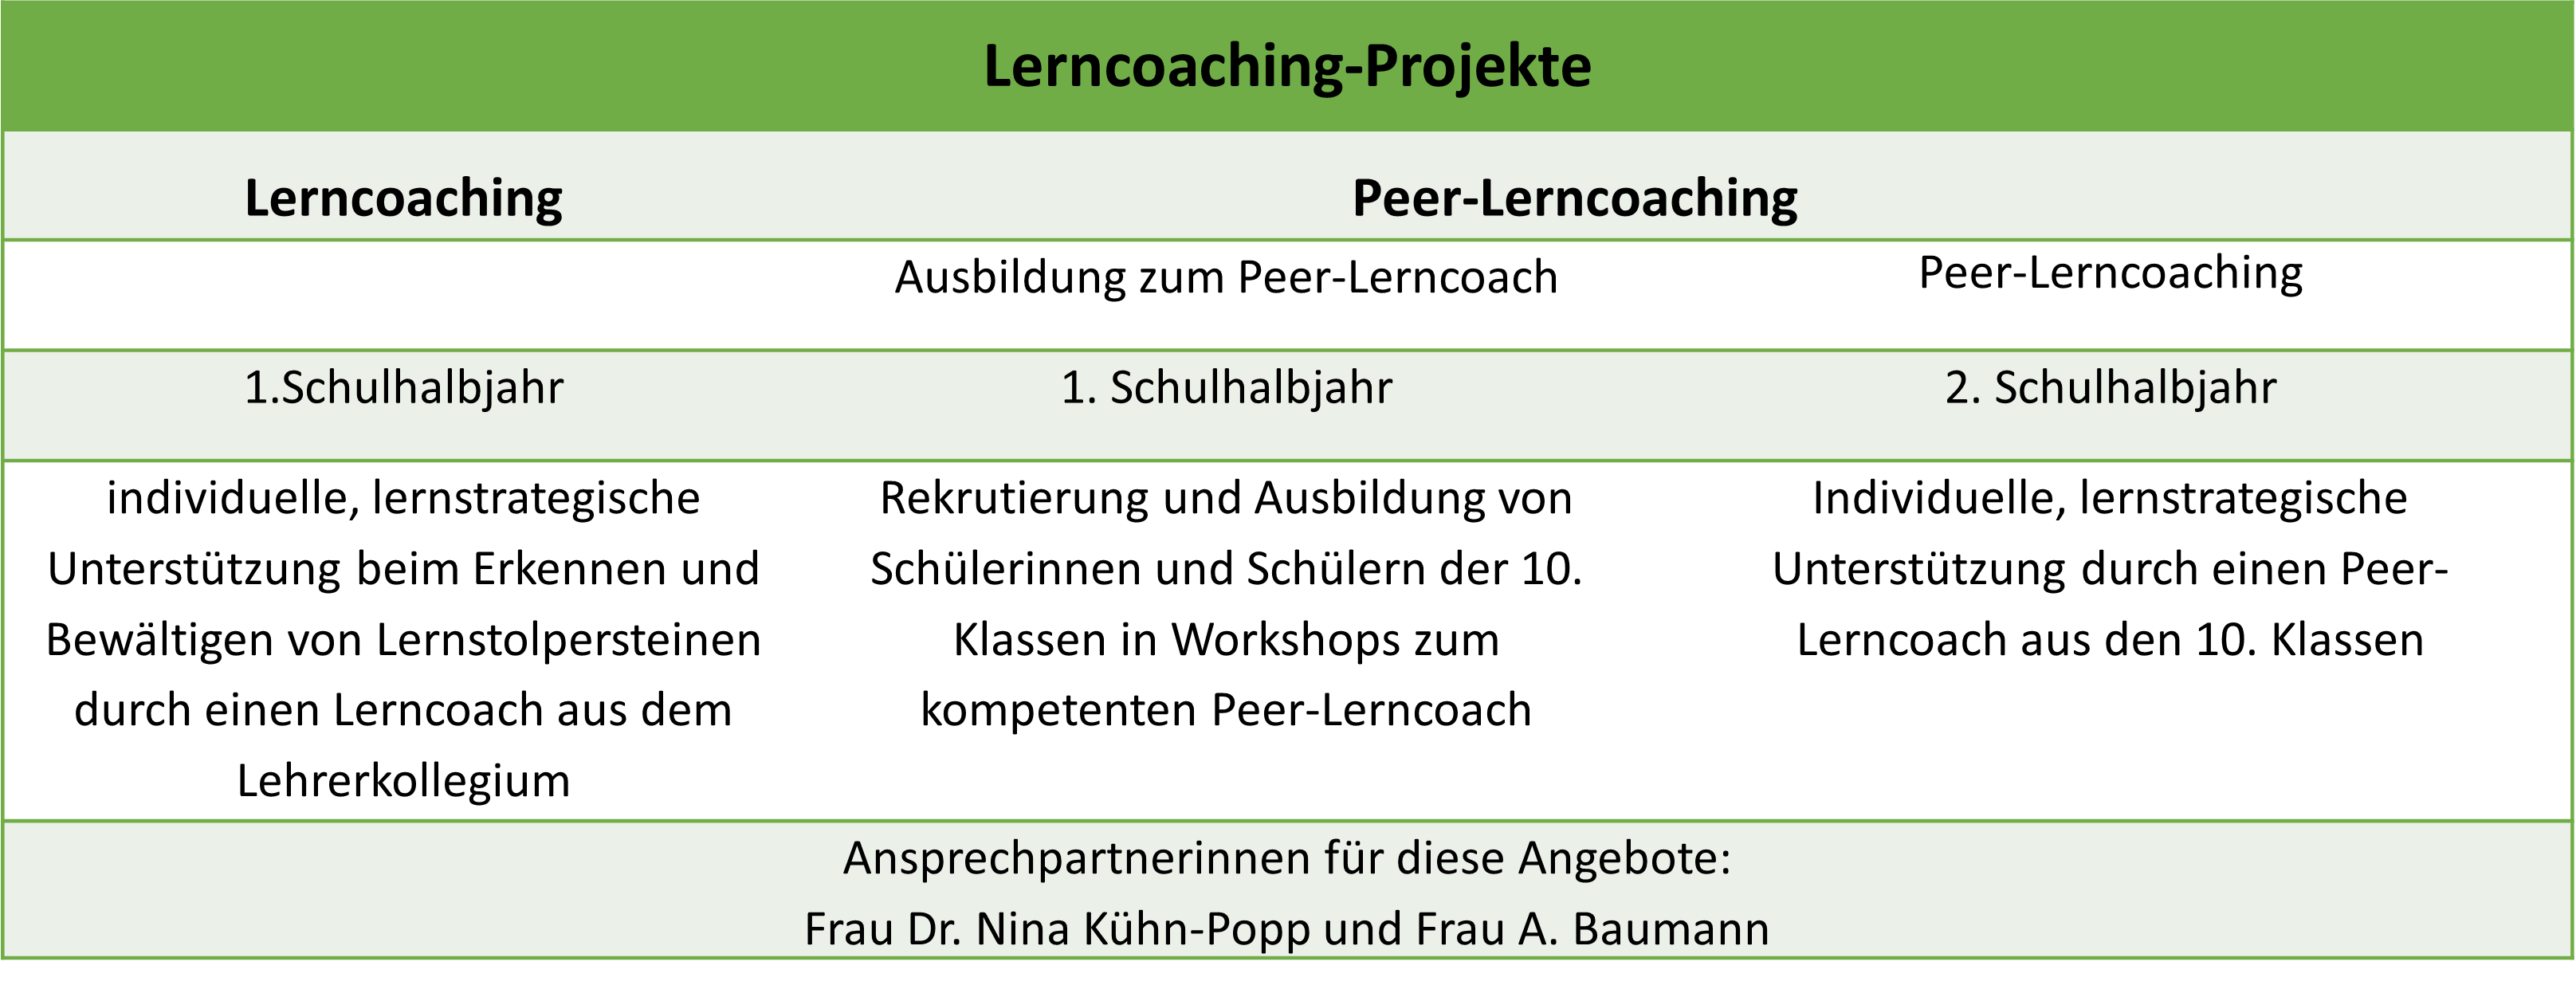 Lerncoaching-Projekte